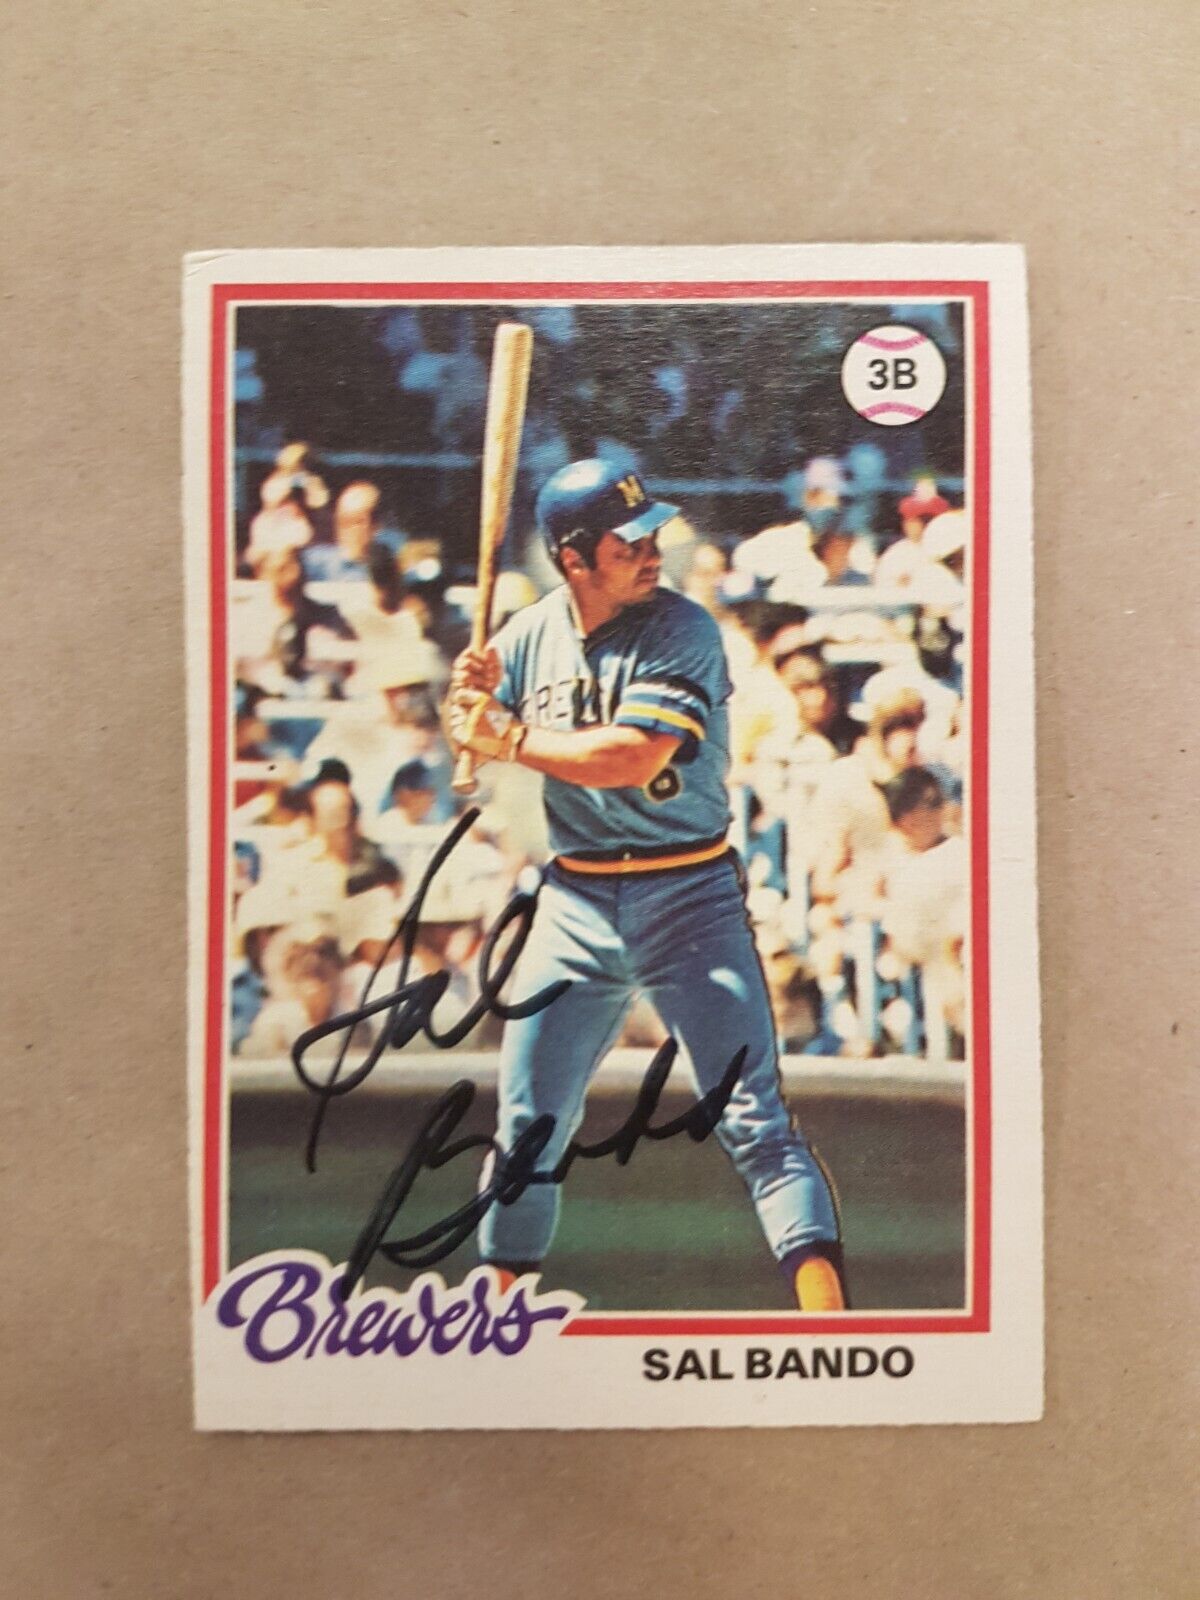 Sal Bando topps 1978 174  Autograph Photo SPORTS signed Baseball card MLB